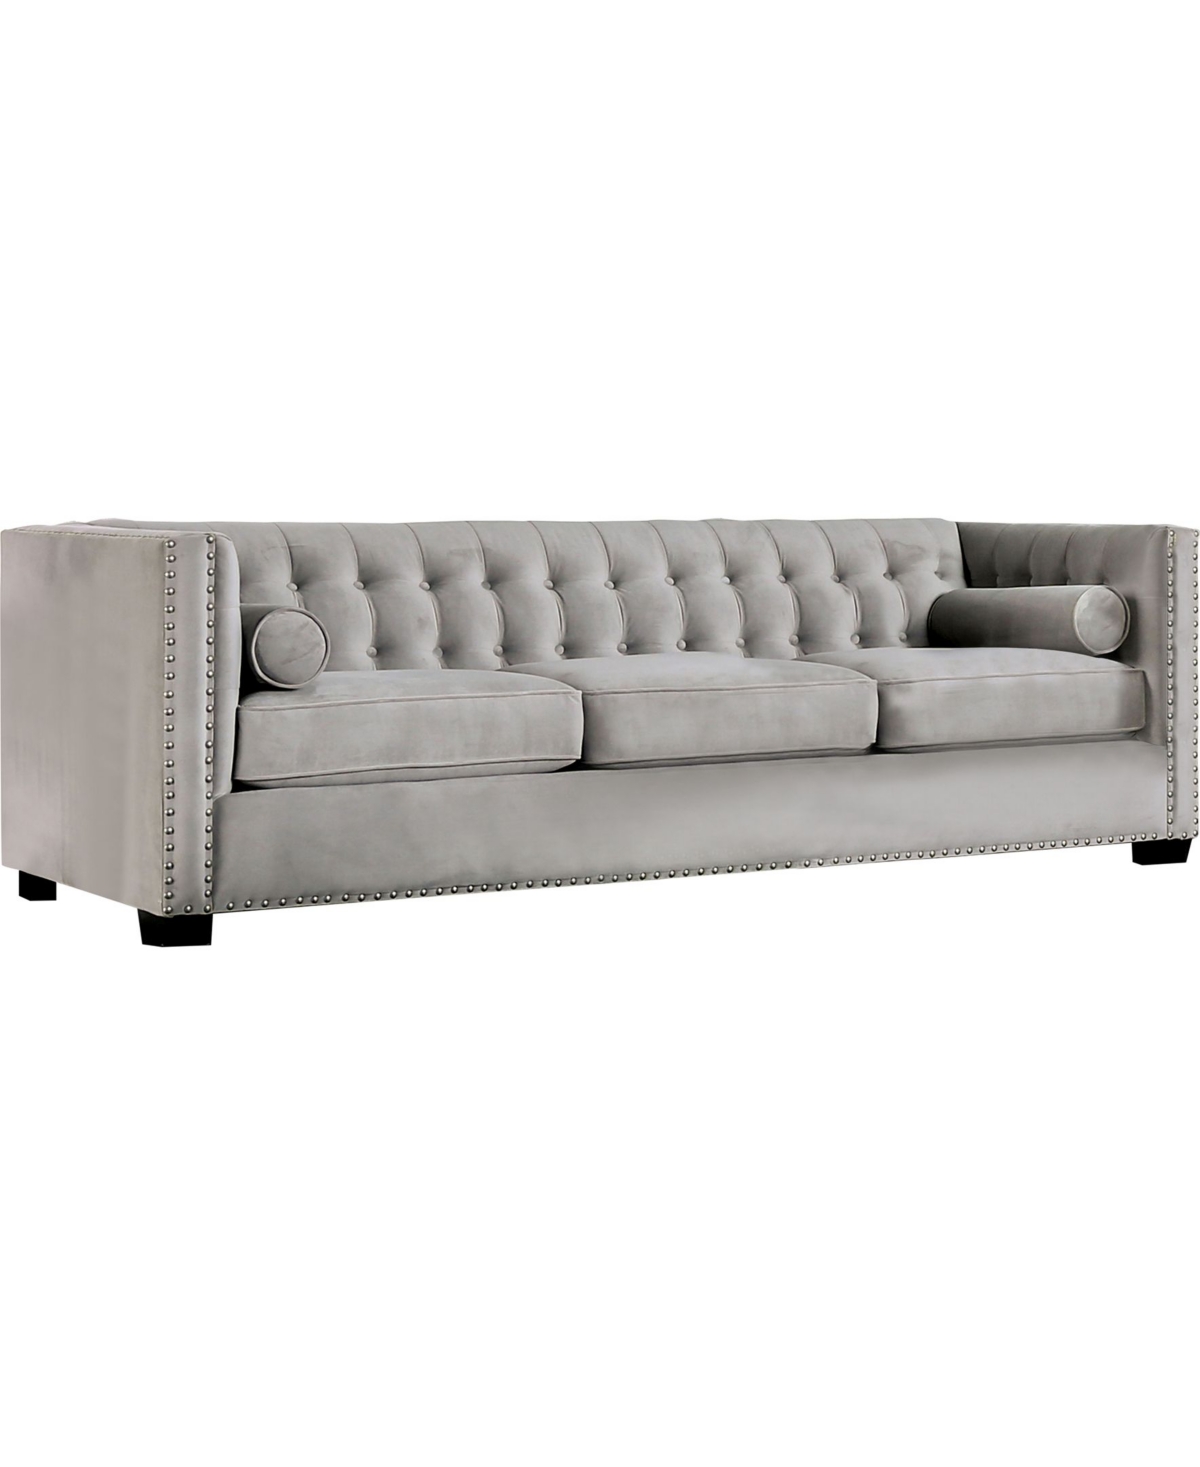 of America Cantar Upholstered Sofa